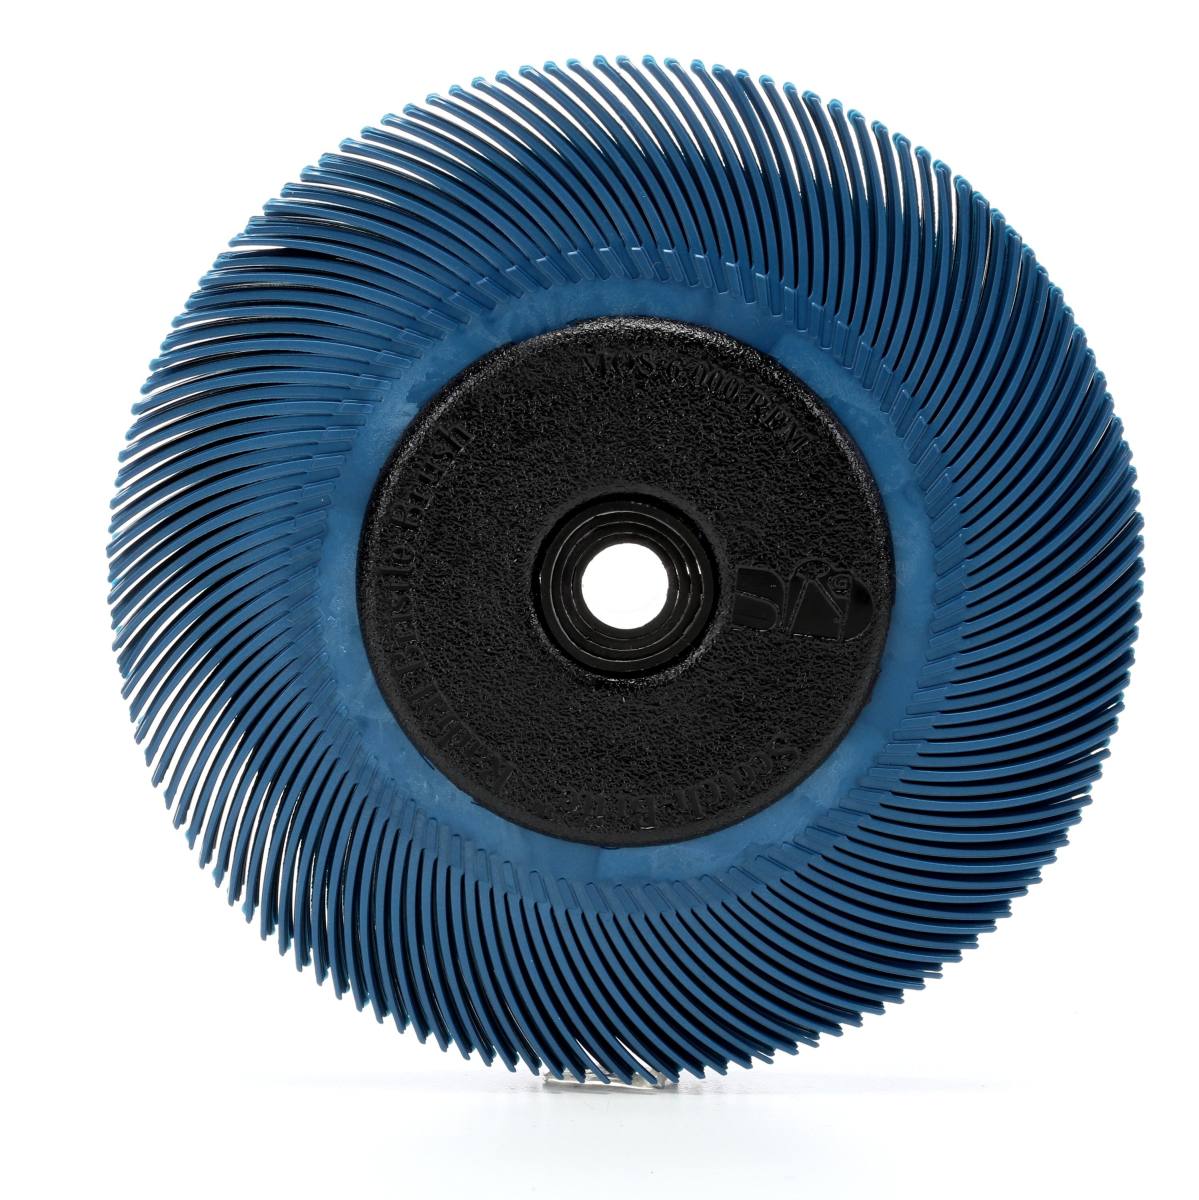 3M Scotch-Brite Radial Bristle Disc BB-ZB avec bride, bleu, 152,4 mm, P400, type C #33214